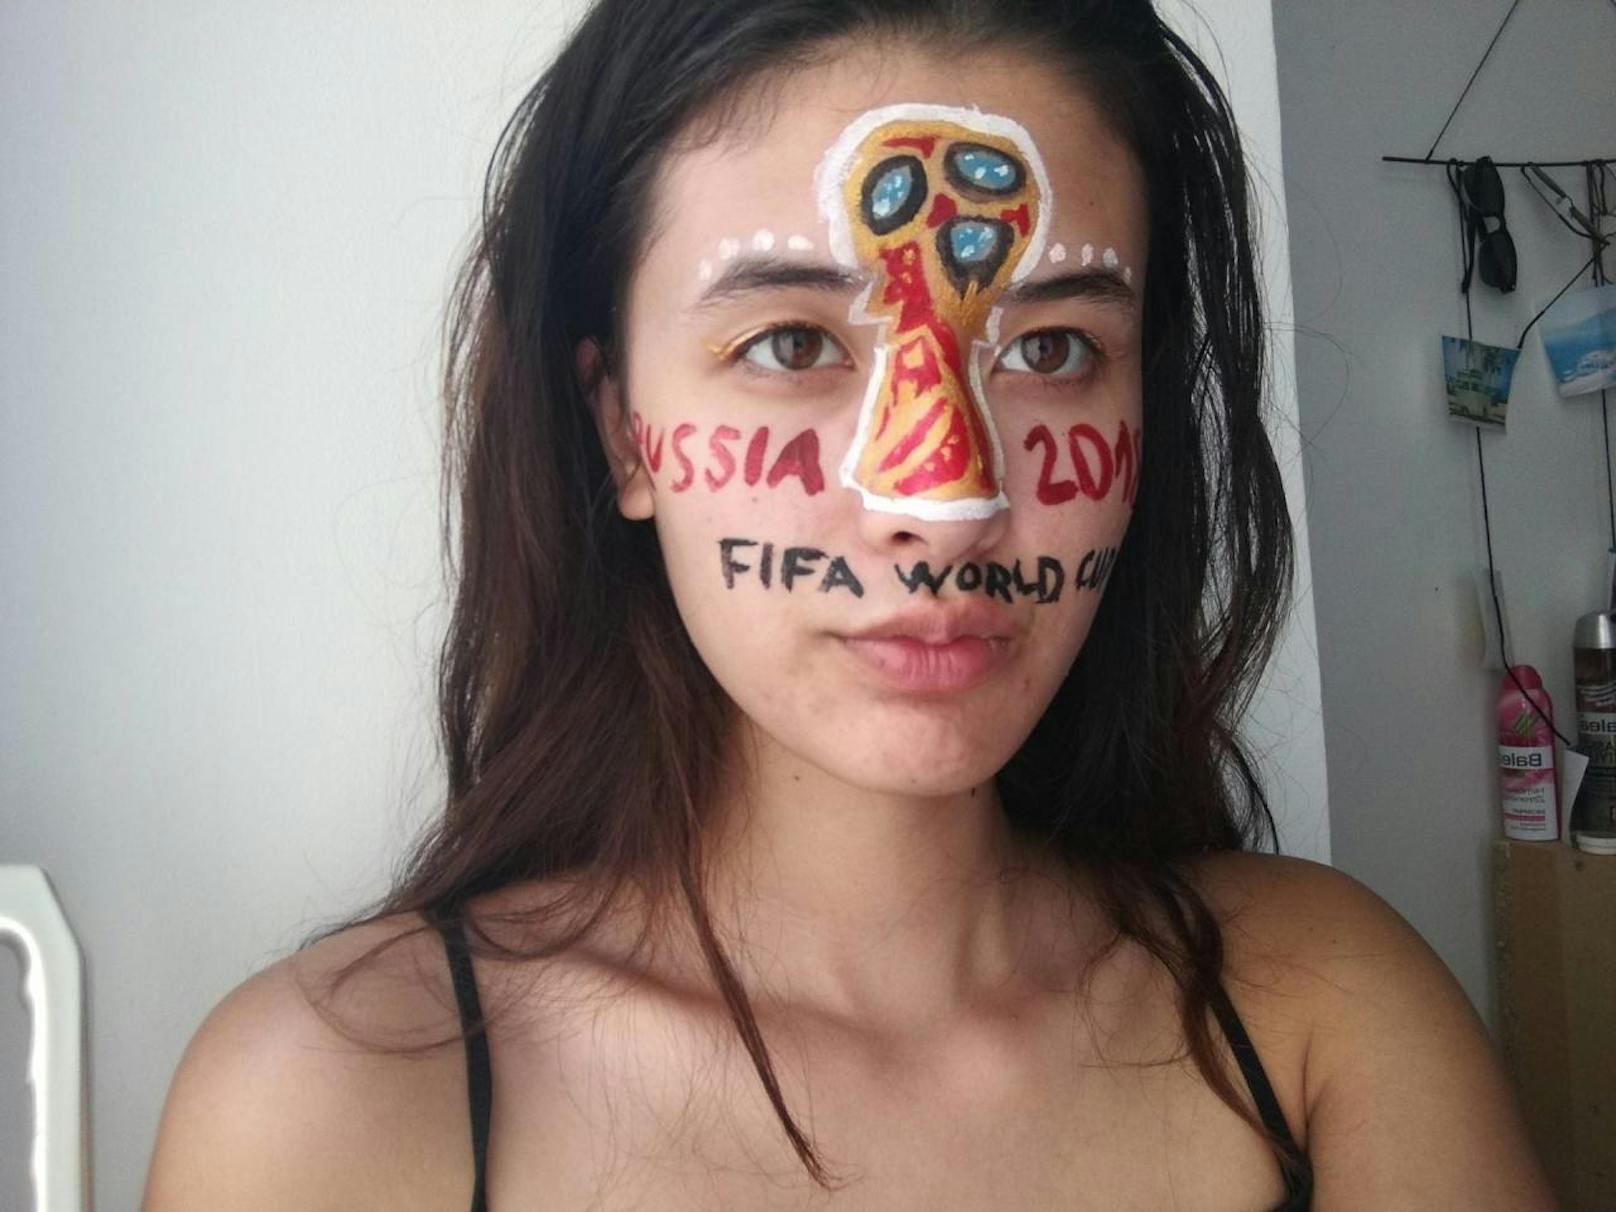 "Fifa world cup"